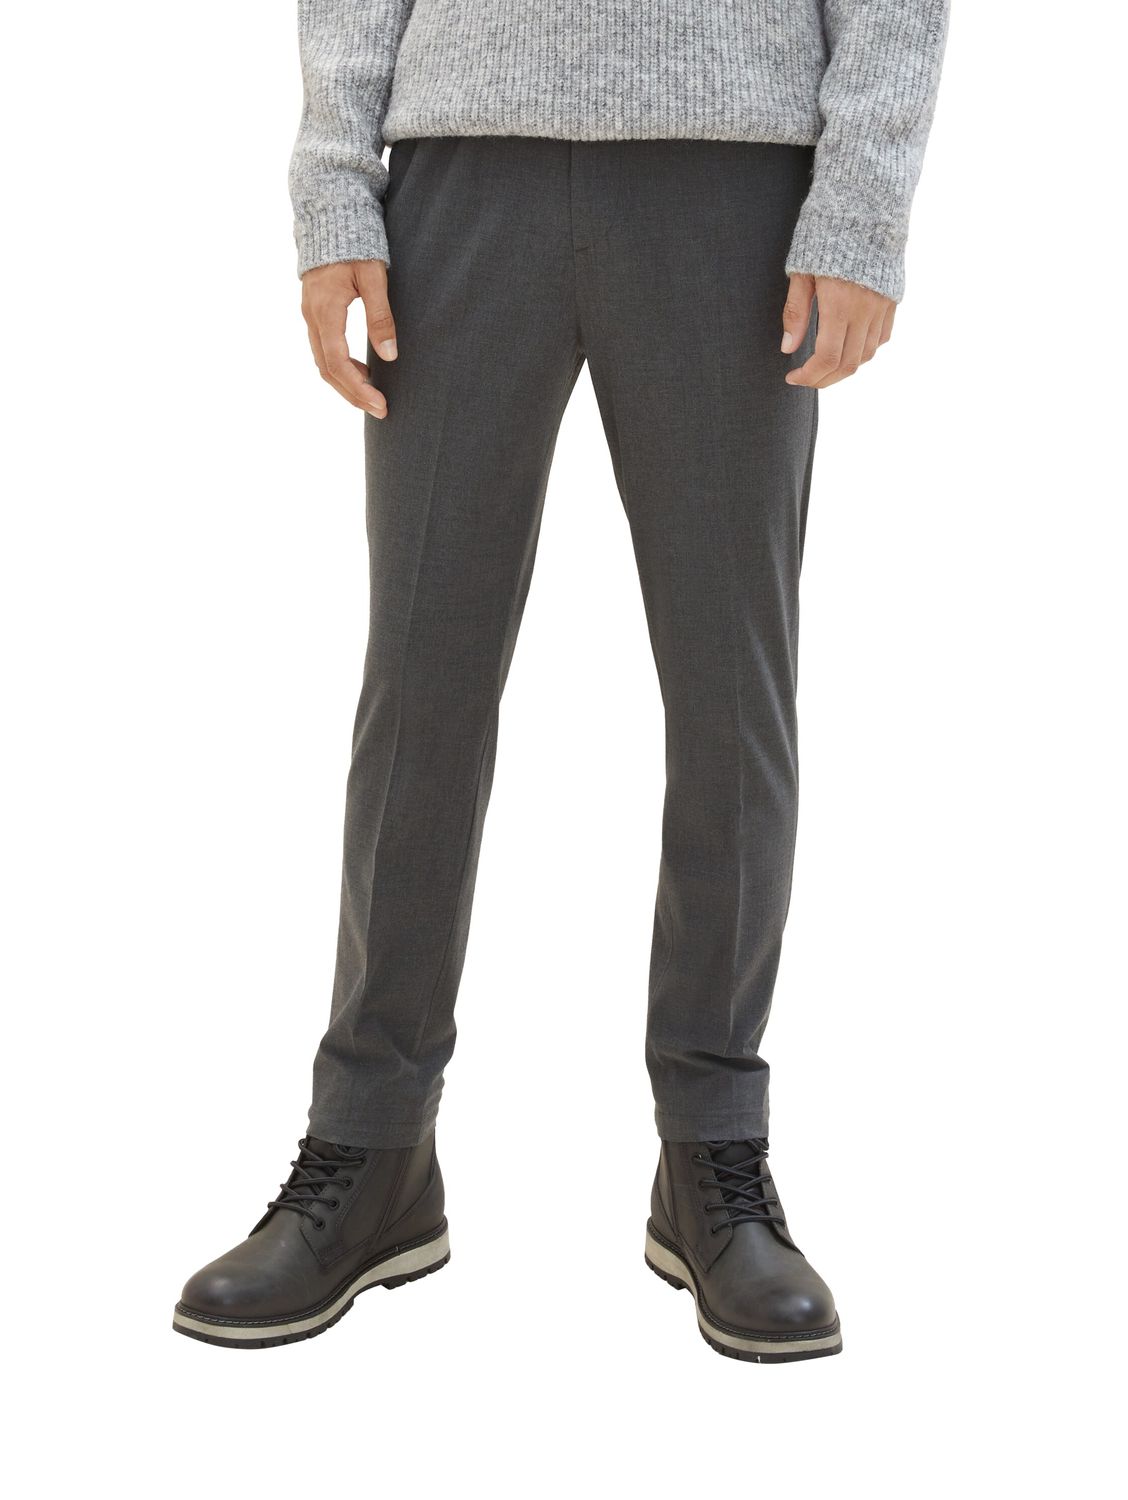 Тканевые брюки TOM TAILOR Denim Stoff/Chino RELAXED TAPERED CHINO comfort/relaxed, серый пуловер tom tailor размер l серый